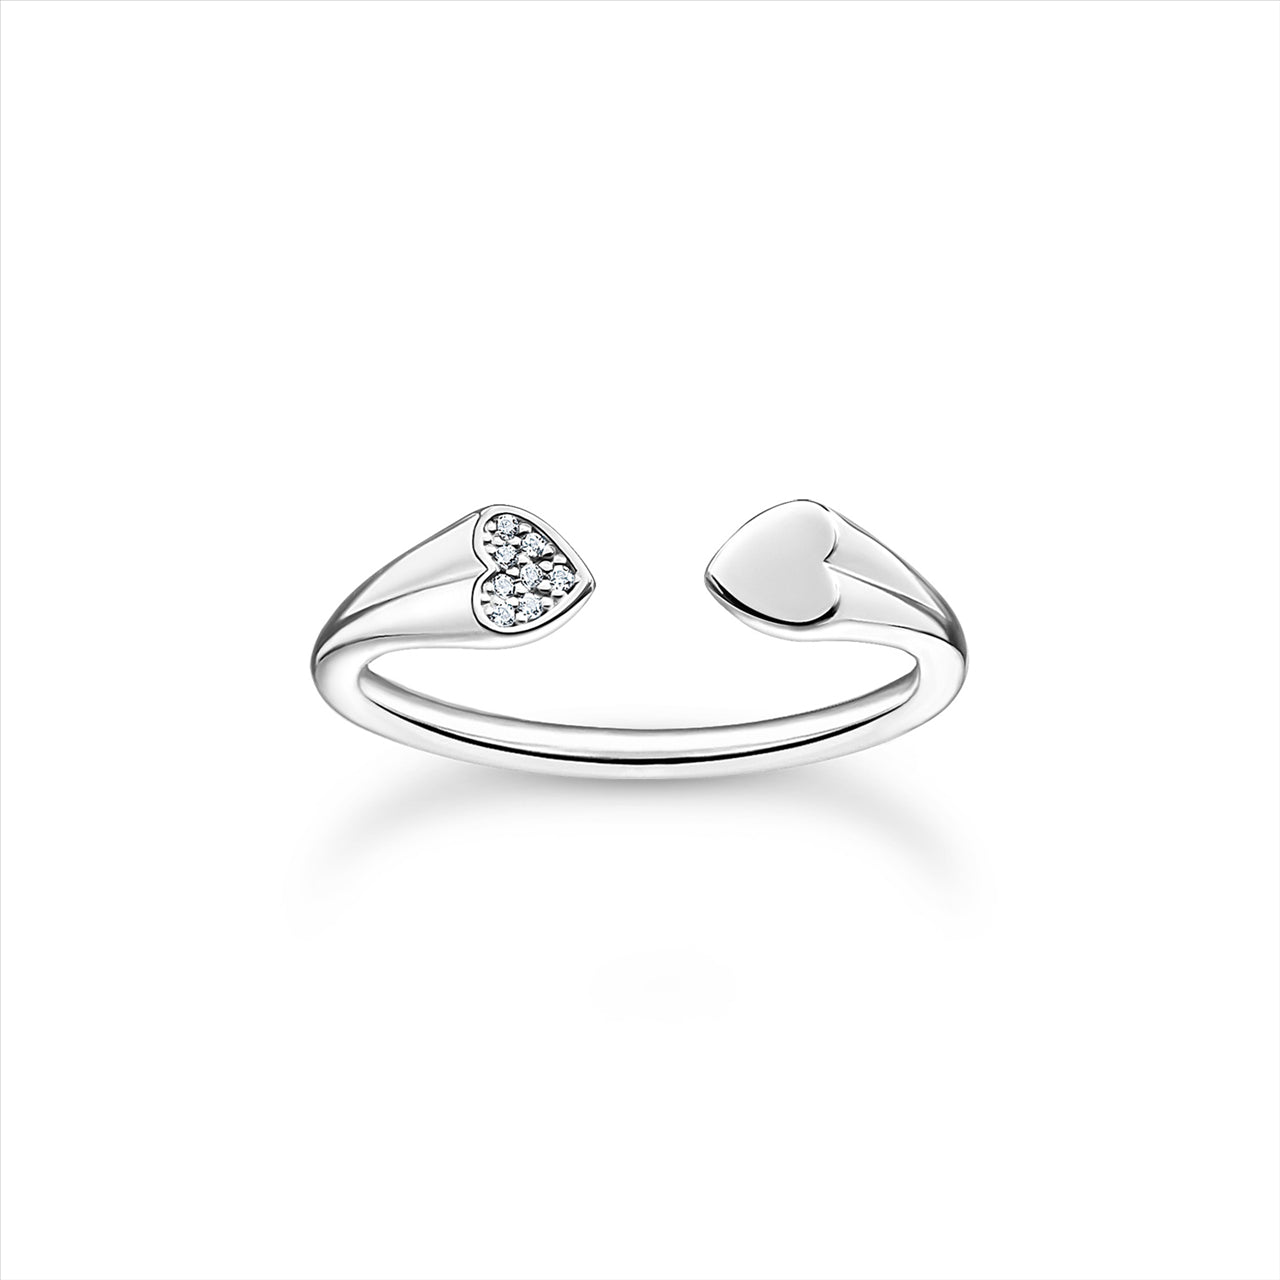 Thomas Sabo Ring with hearts silver